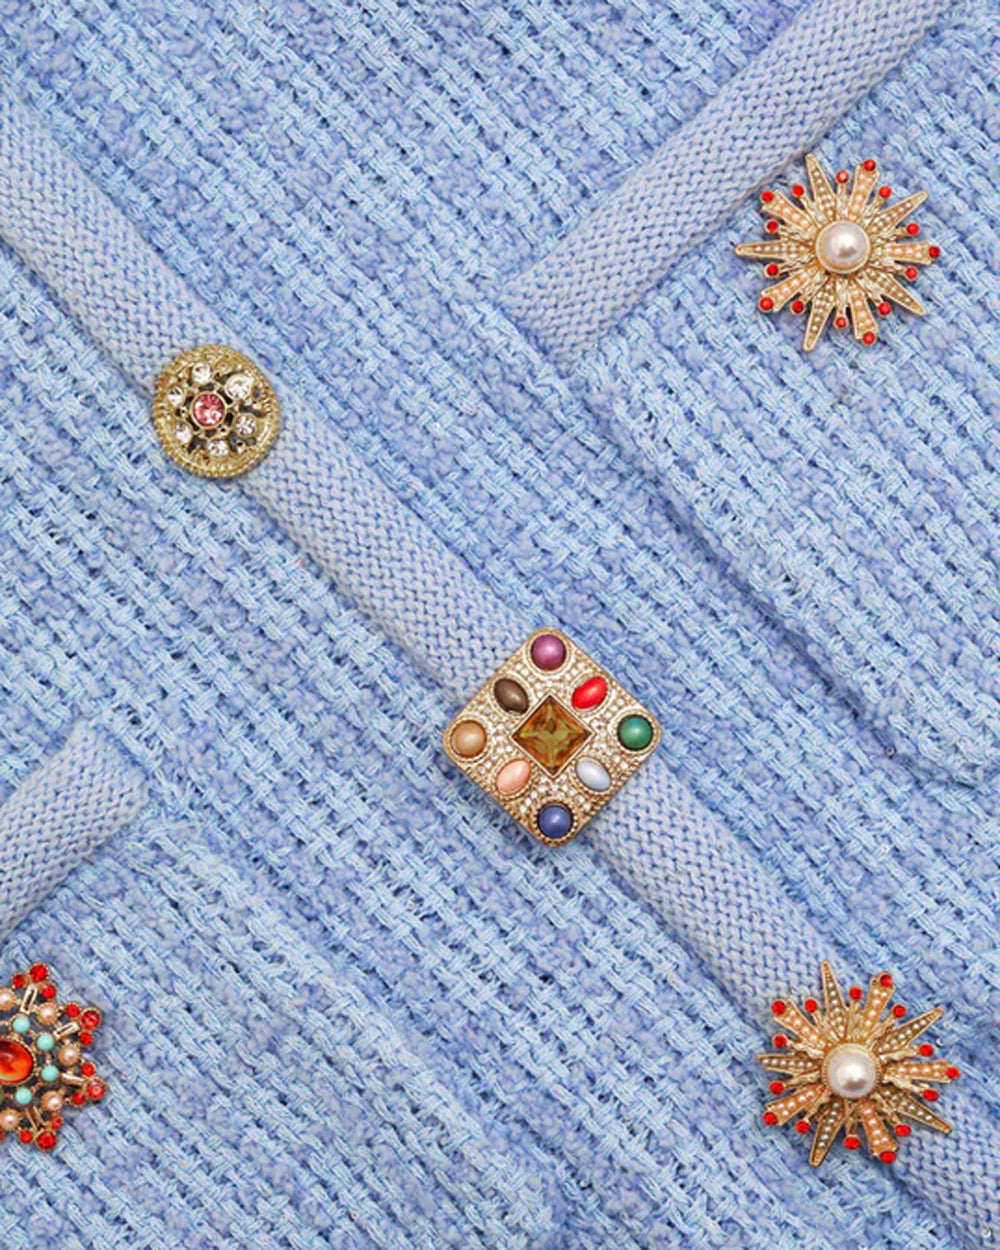 Blue Knit Button Mini Dress